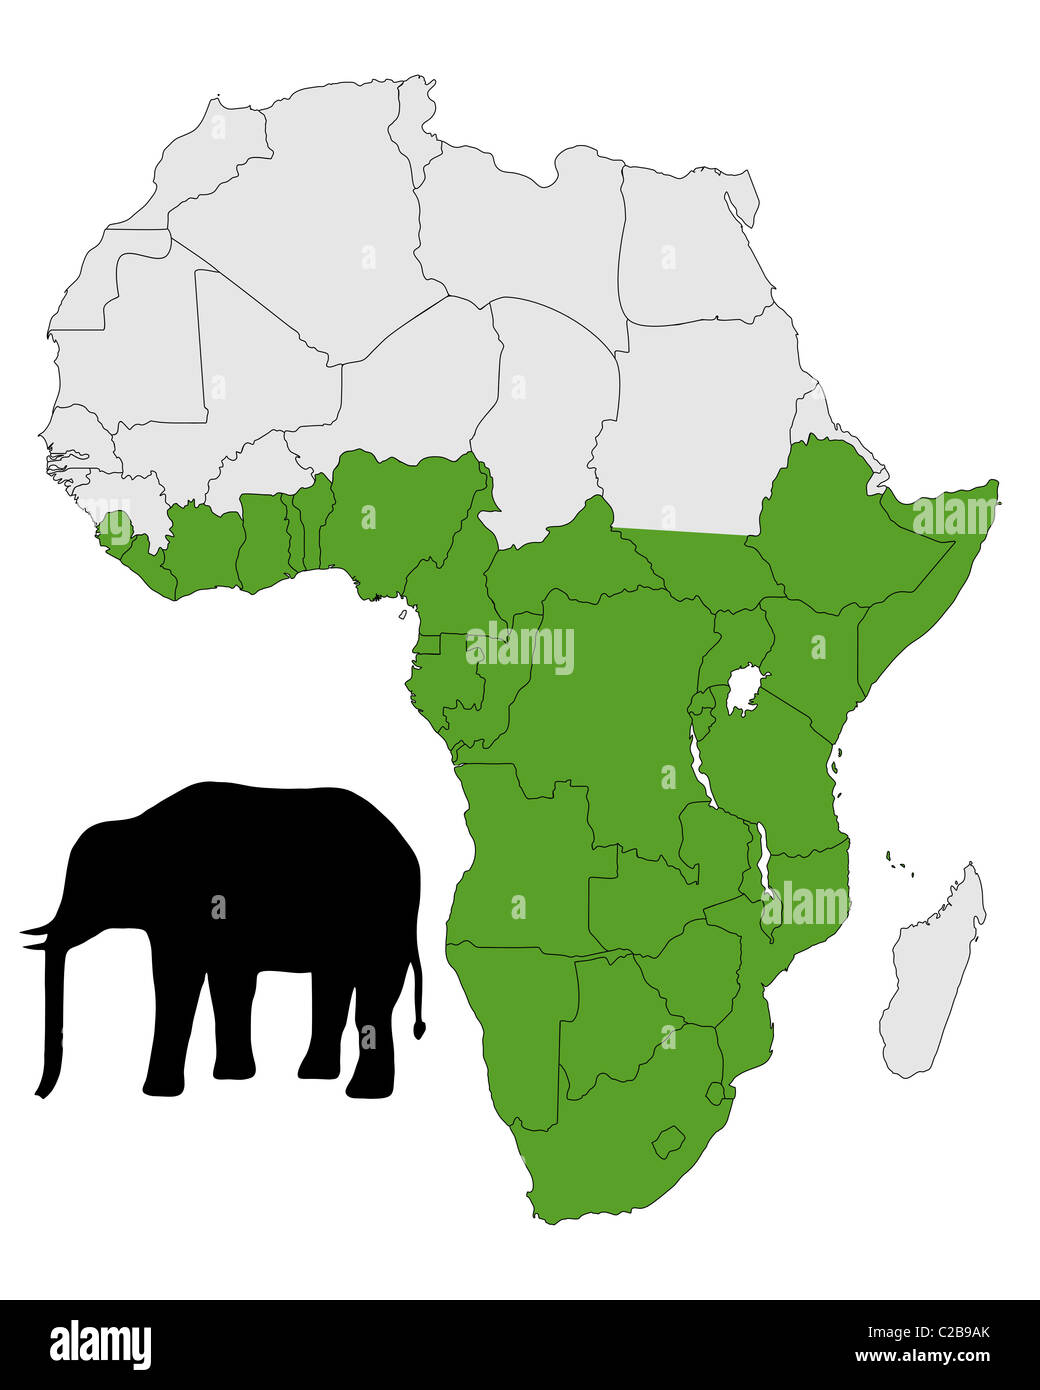 African Elephant Range C2B9AK 